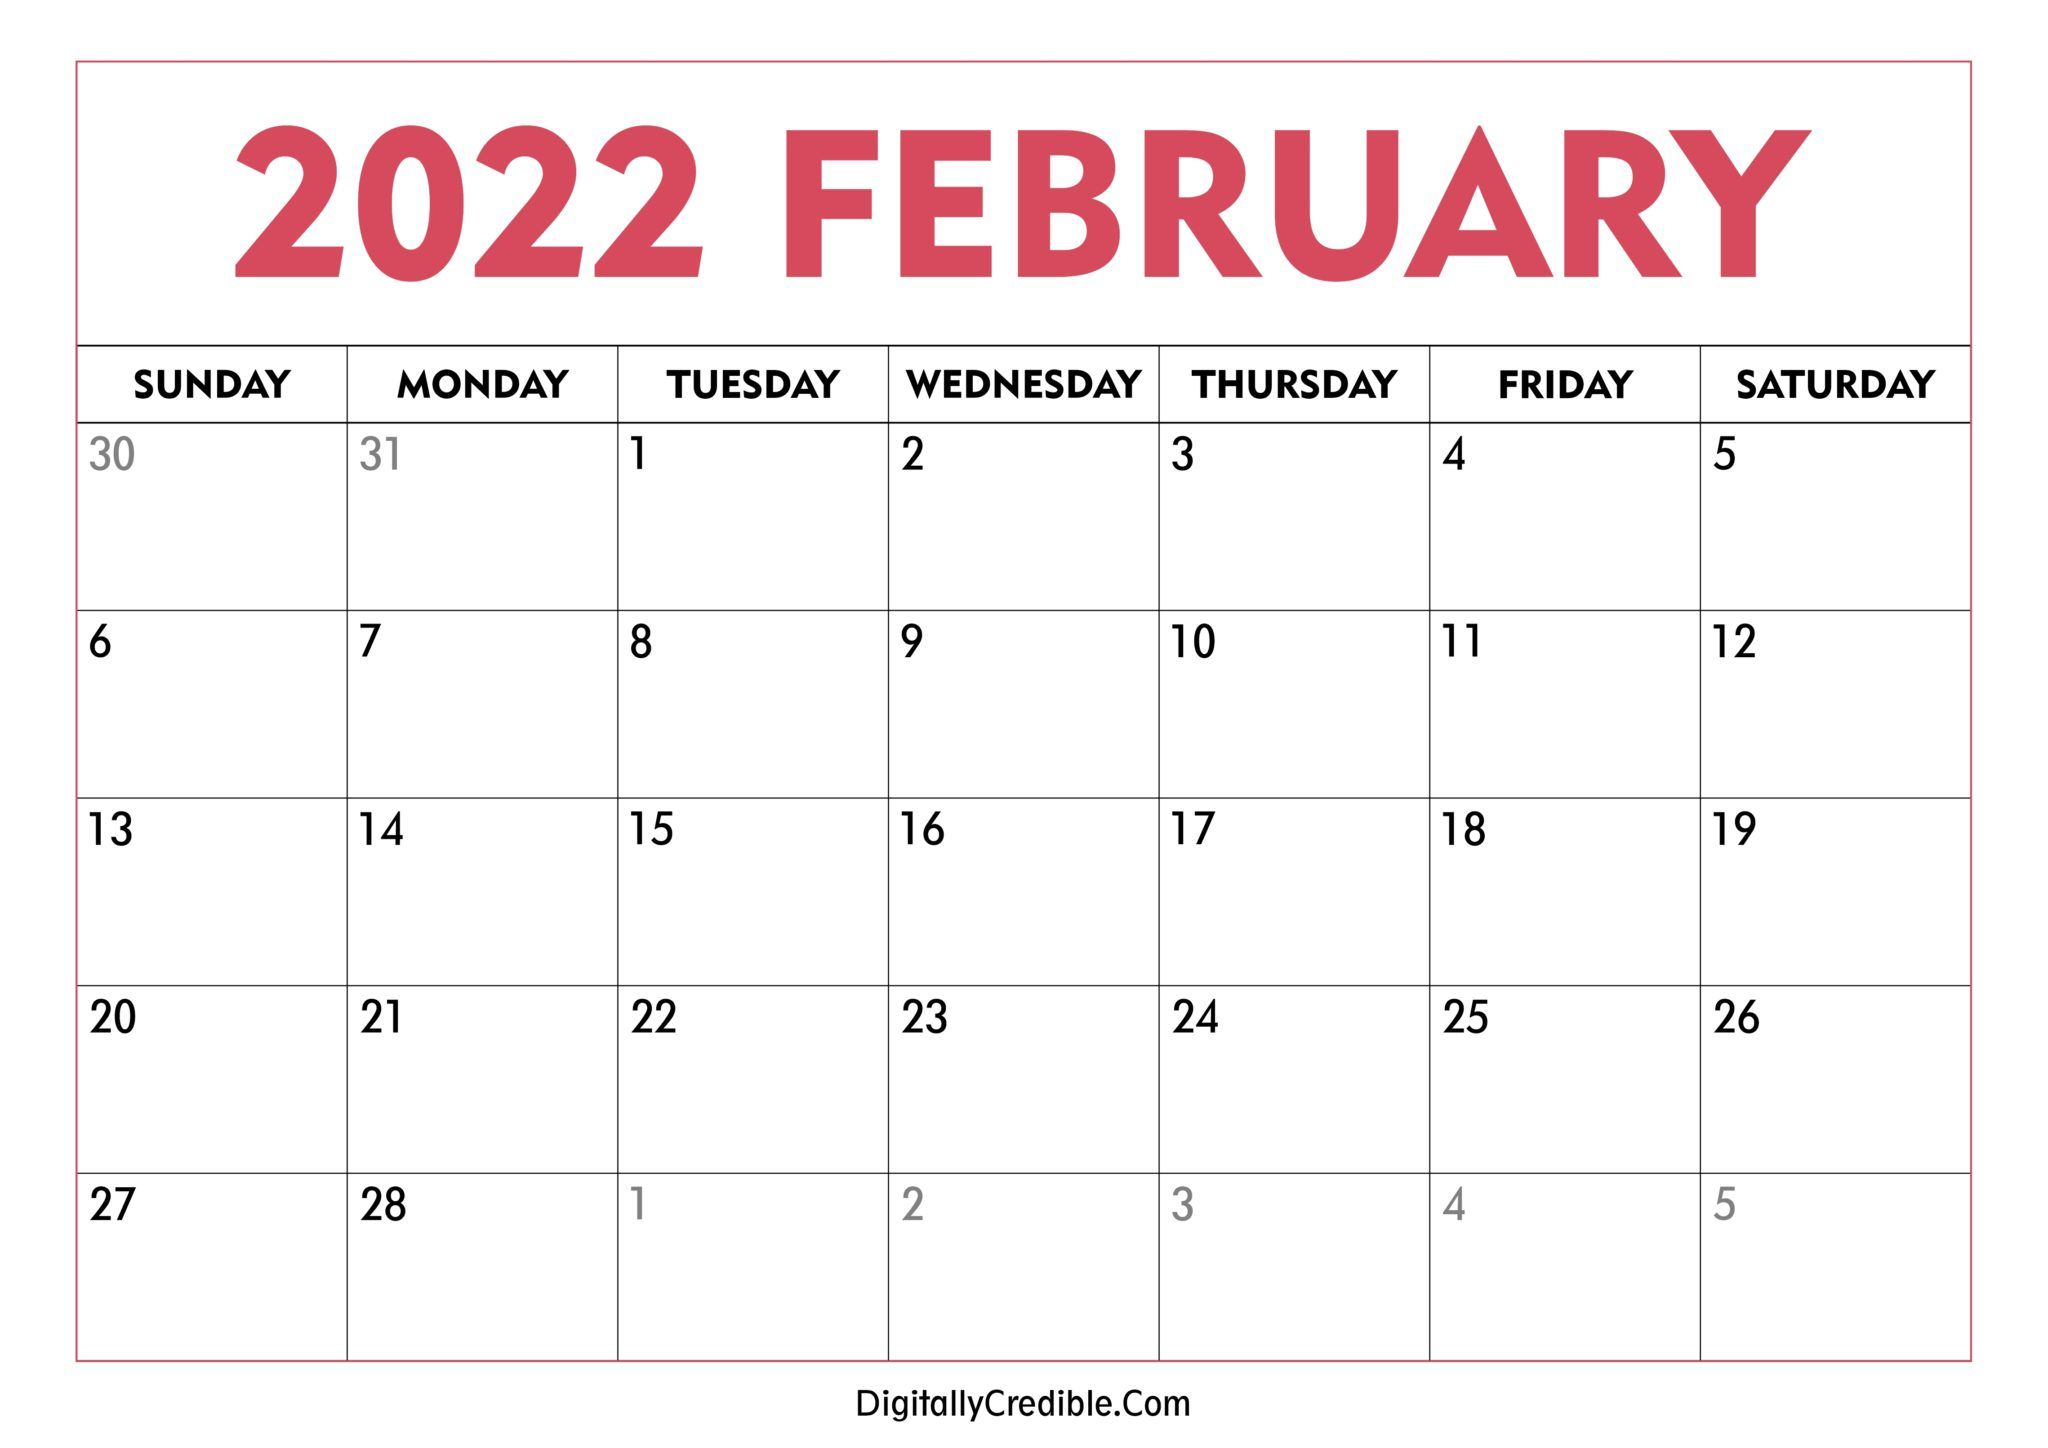 February 2022 Calendar Printable - Desk &amp; Wall